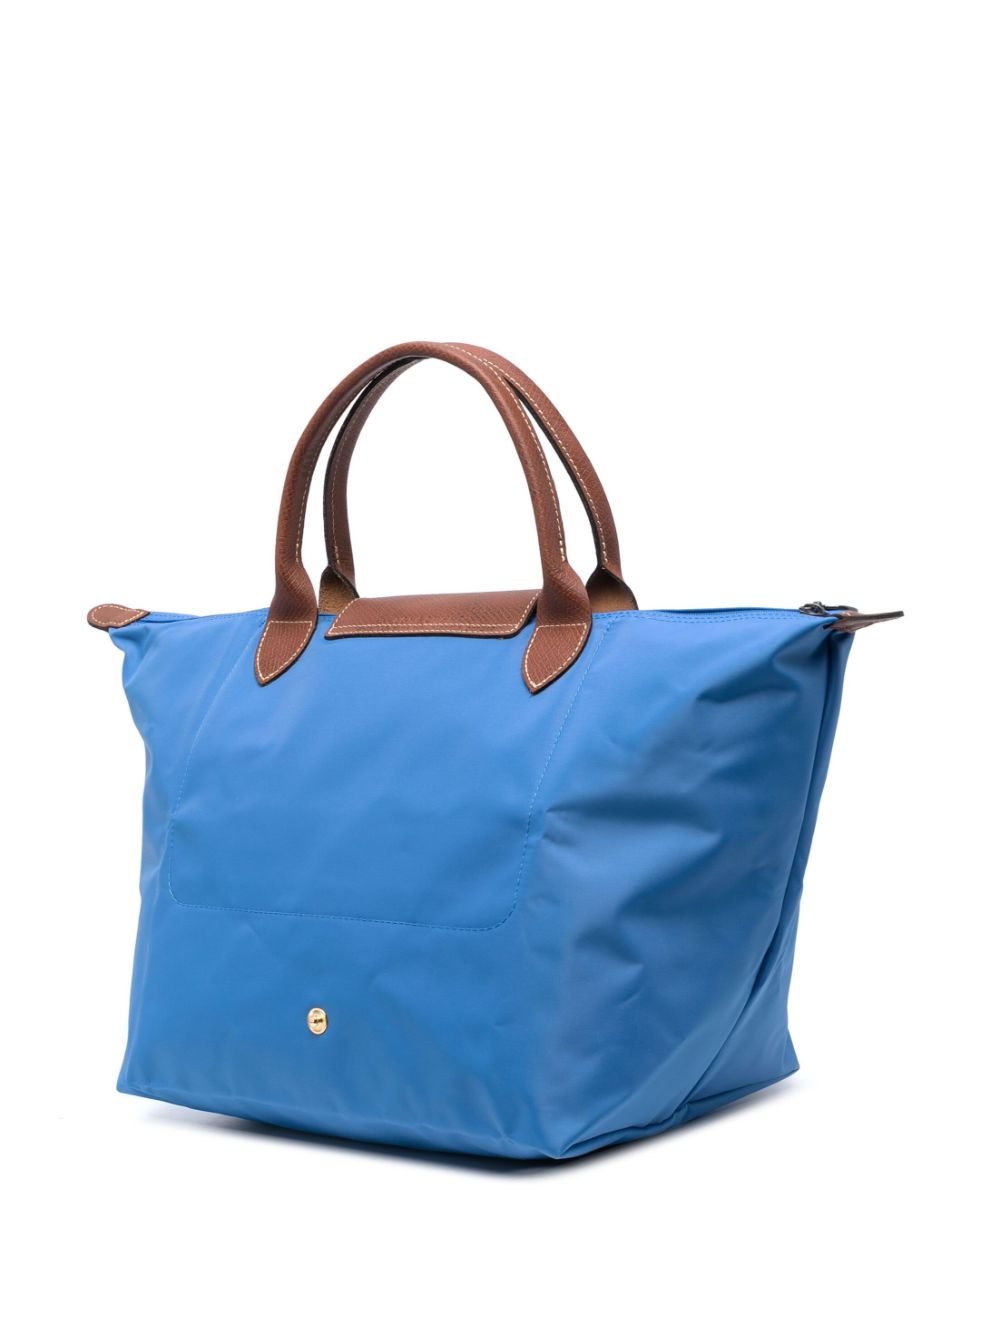 Longchamp Medium Le Pliage Tote Bag - Farfetch